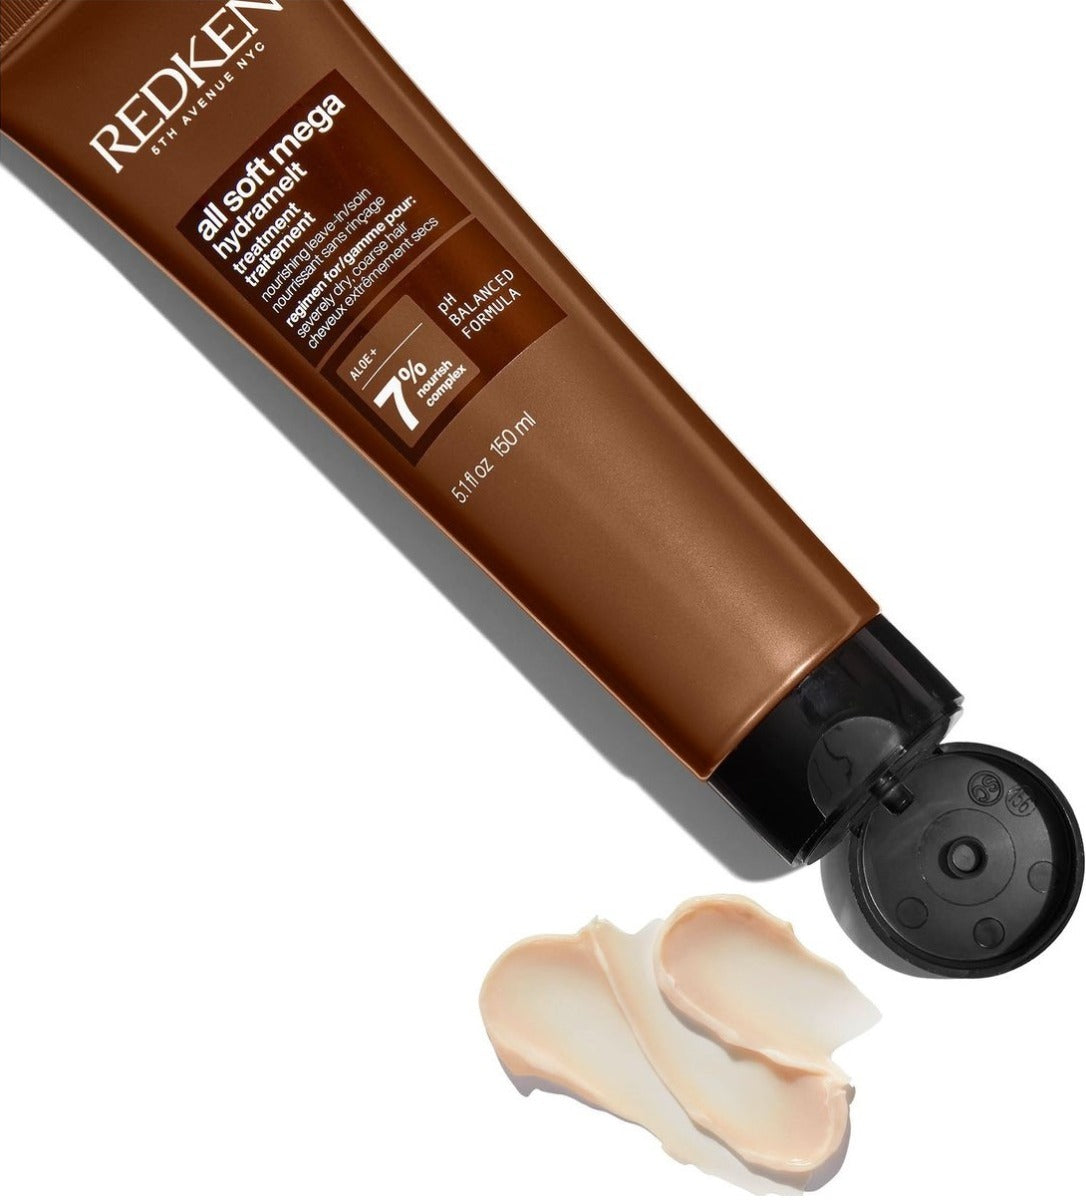 Redken All Soft Mega Hydra-melt Hair Cream 150ml